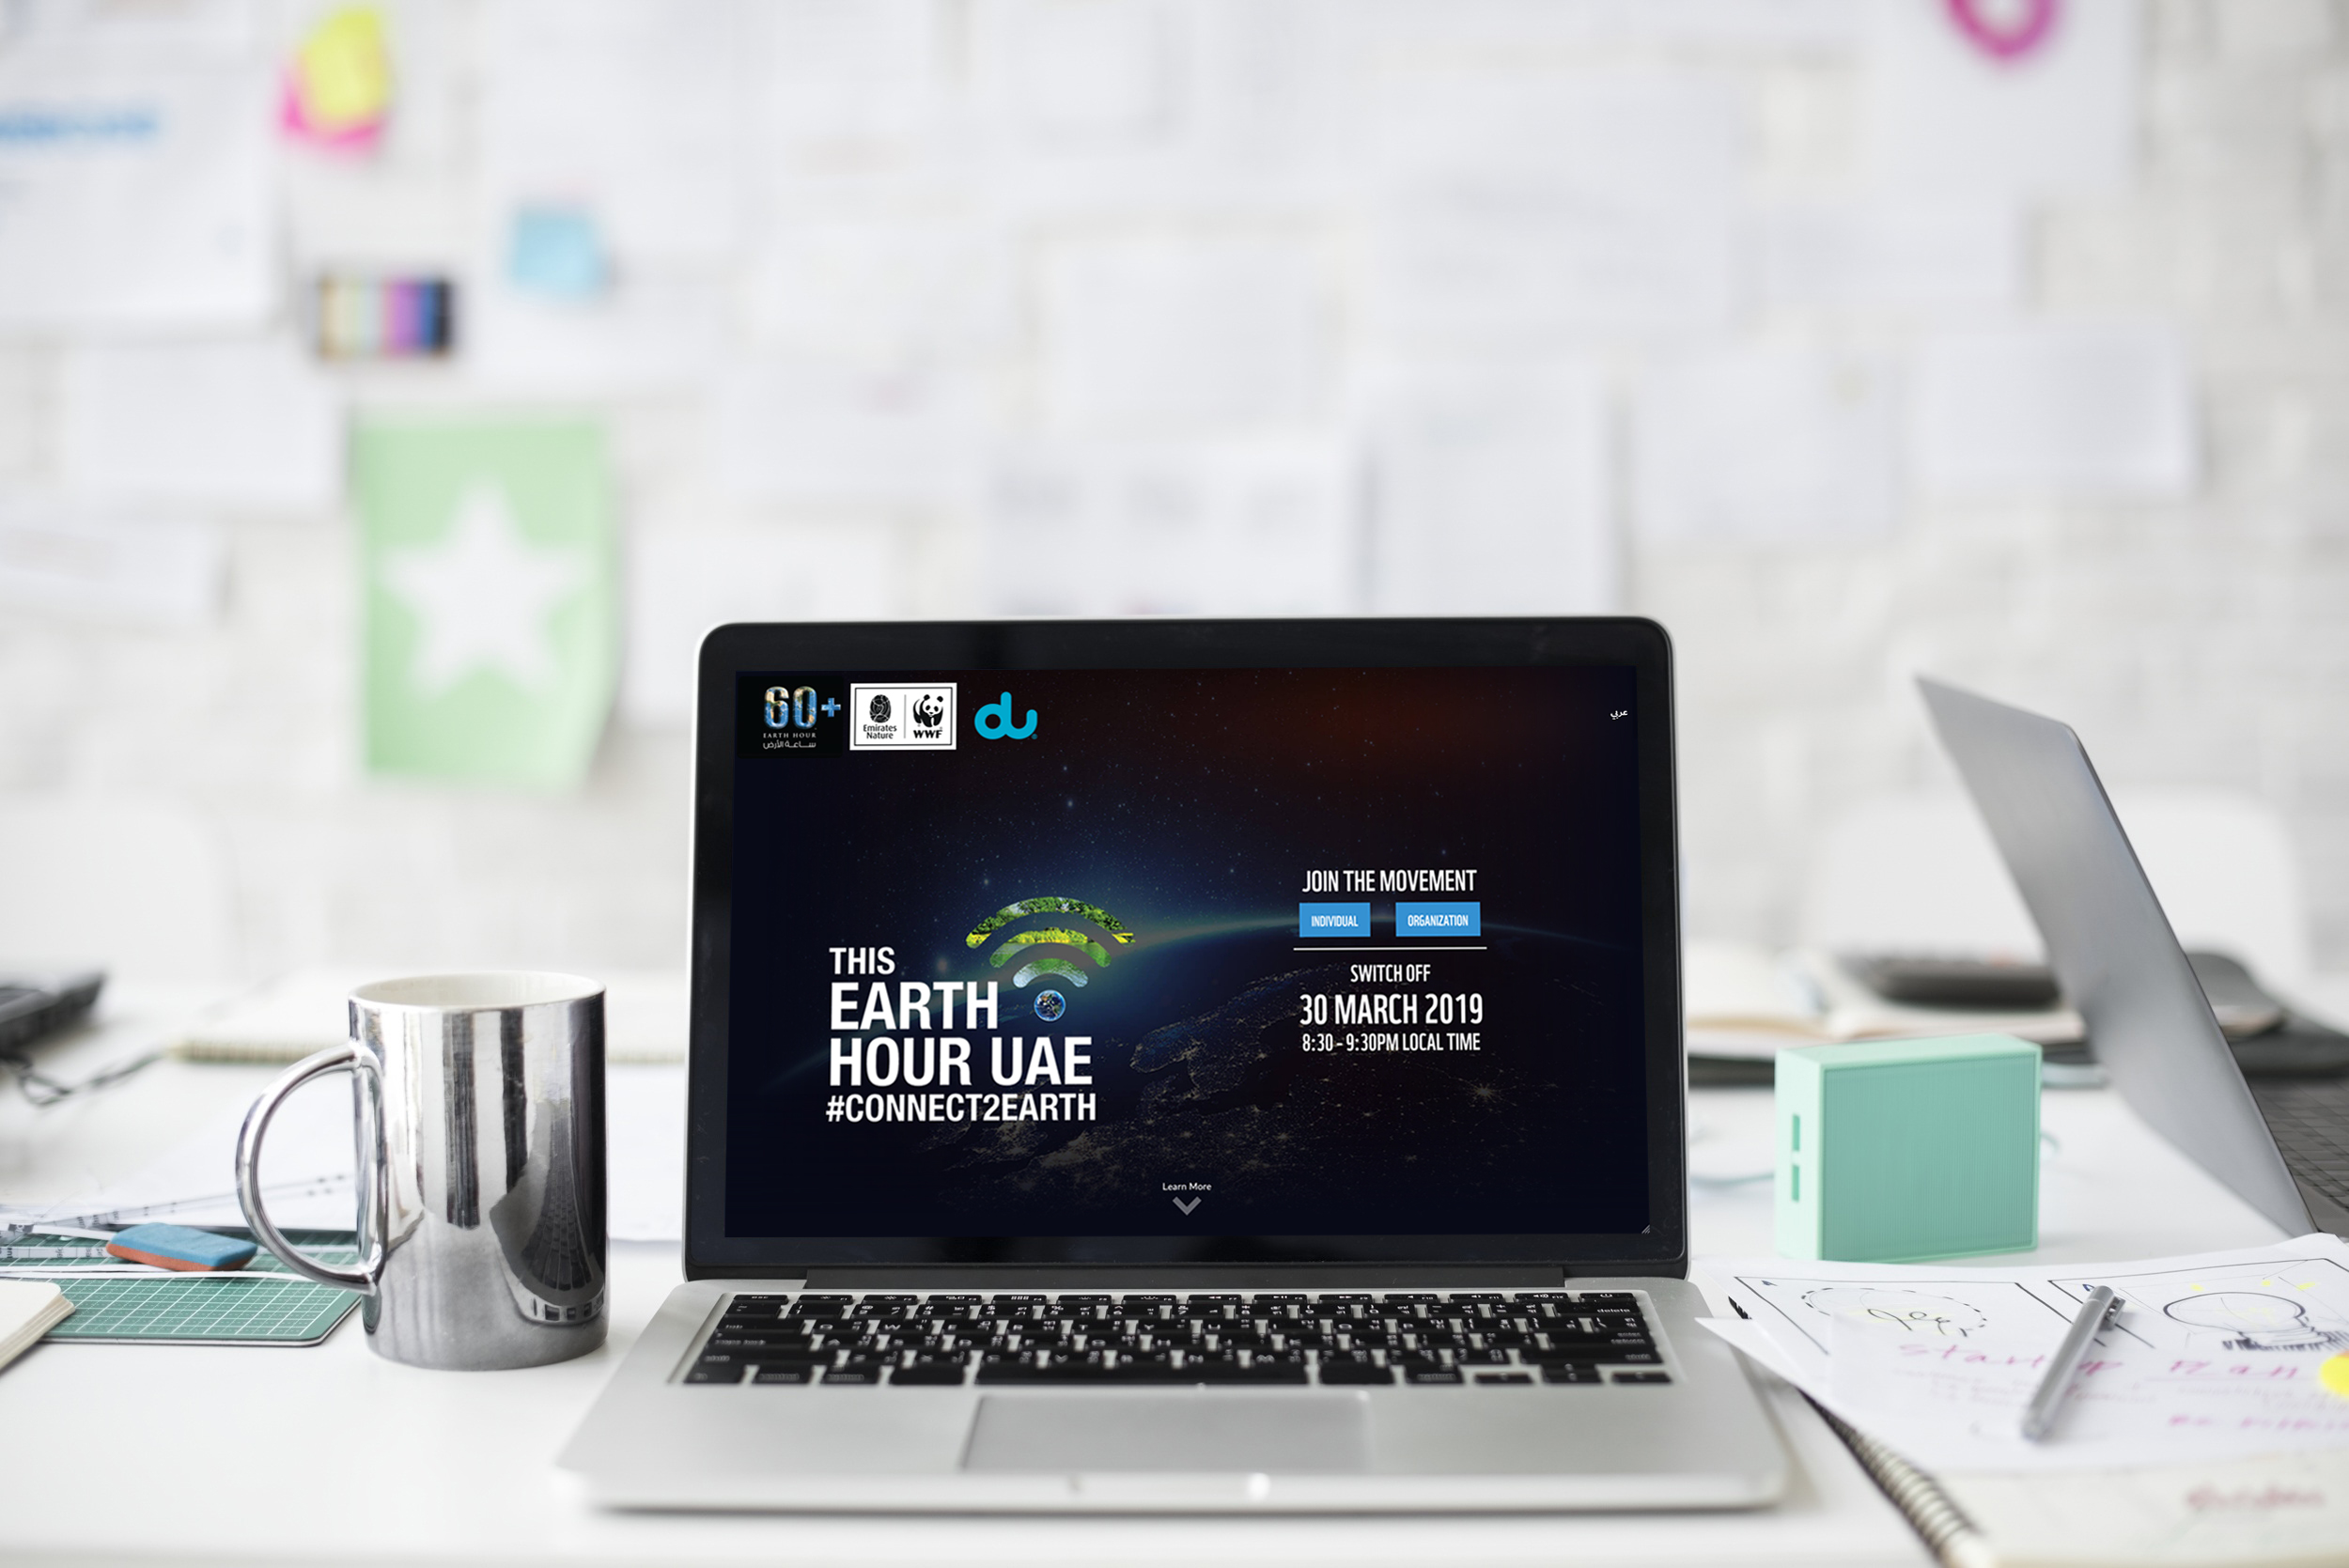 Earth Hour UAE. Platform to pledge to take action ‘beyond the hour'